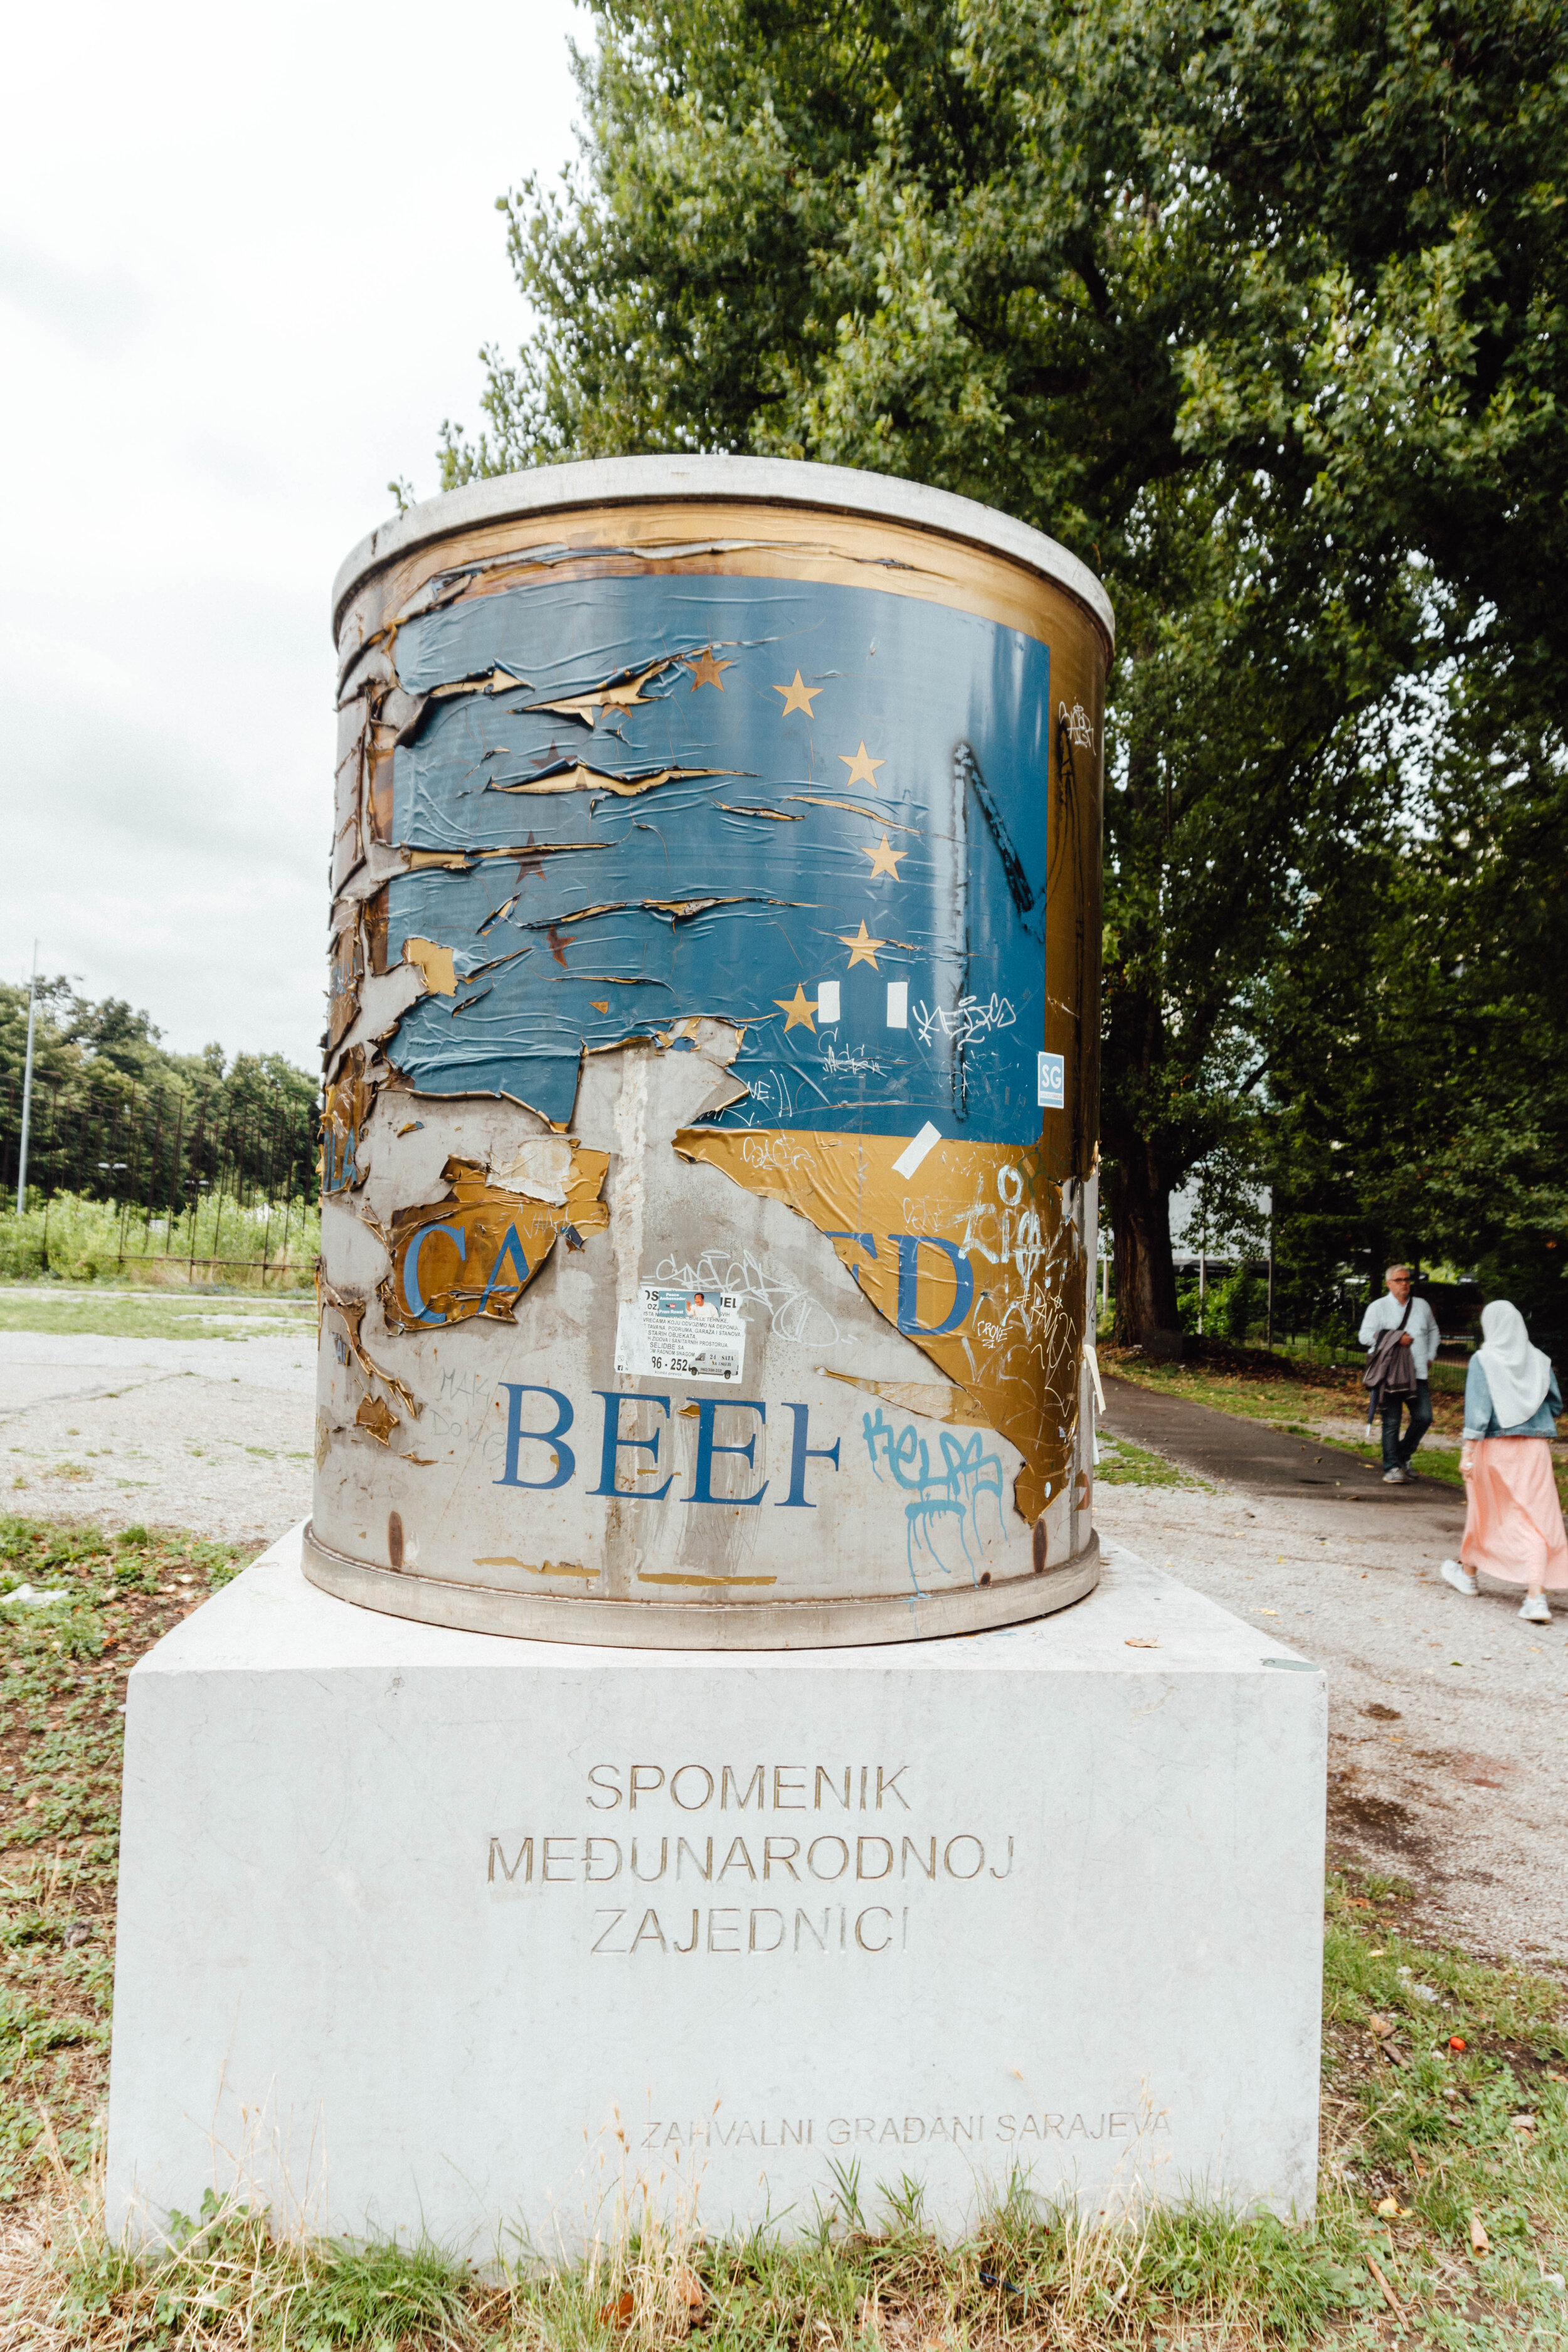 canned beef statue, Bosnia and Herzegovina